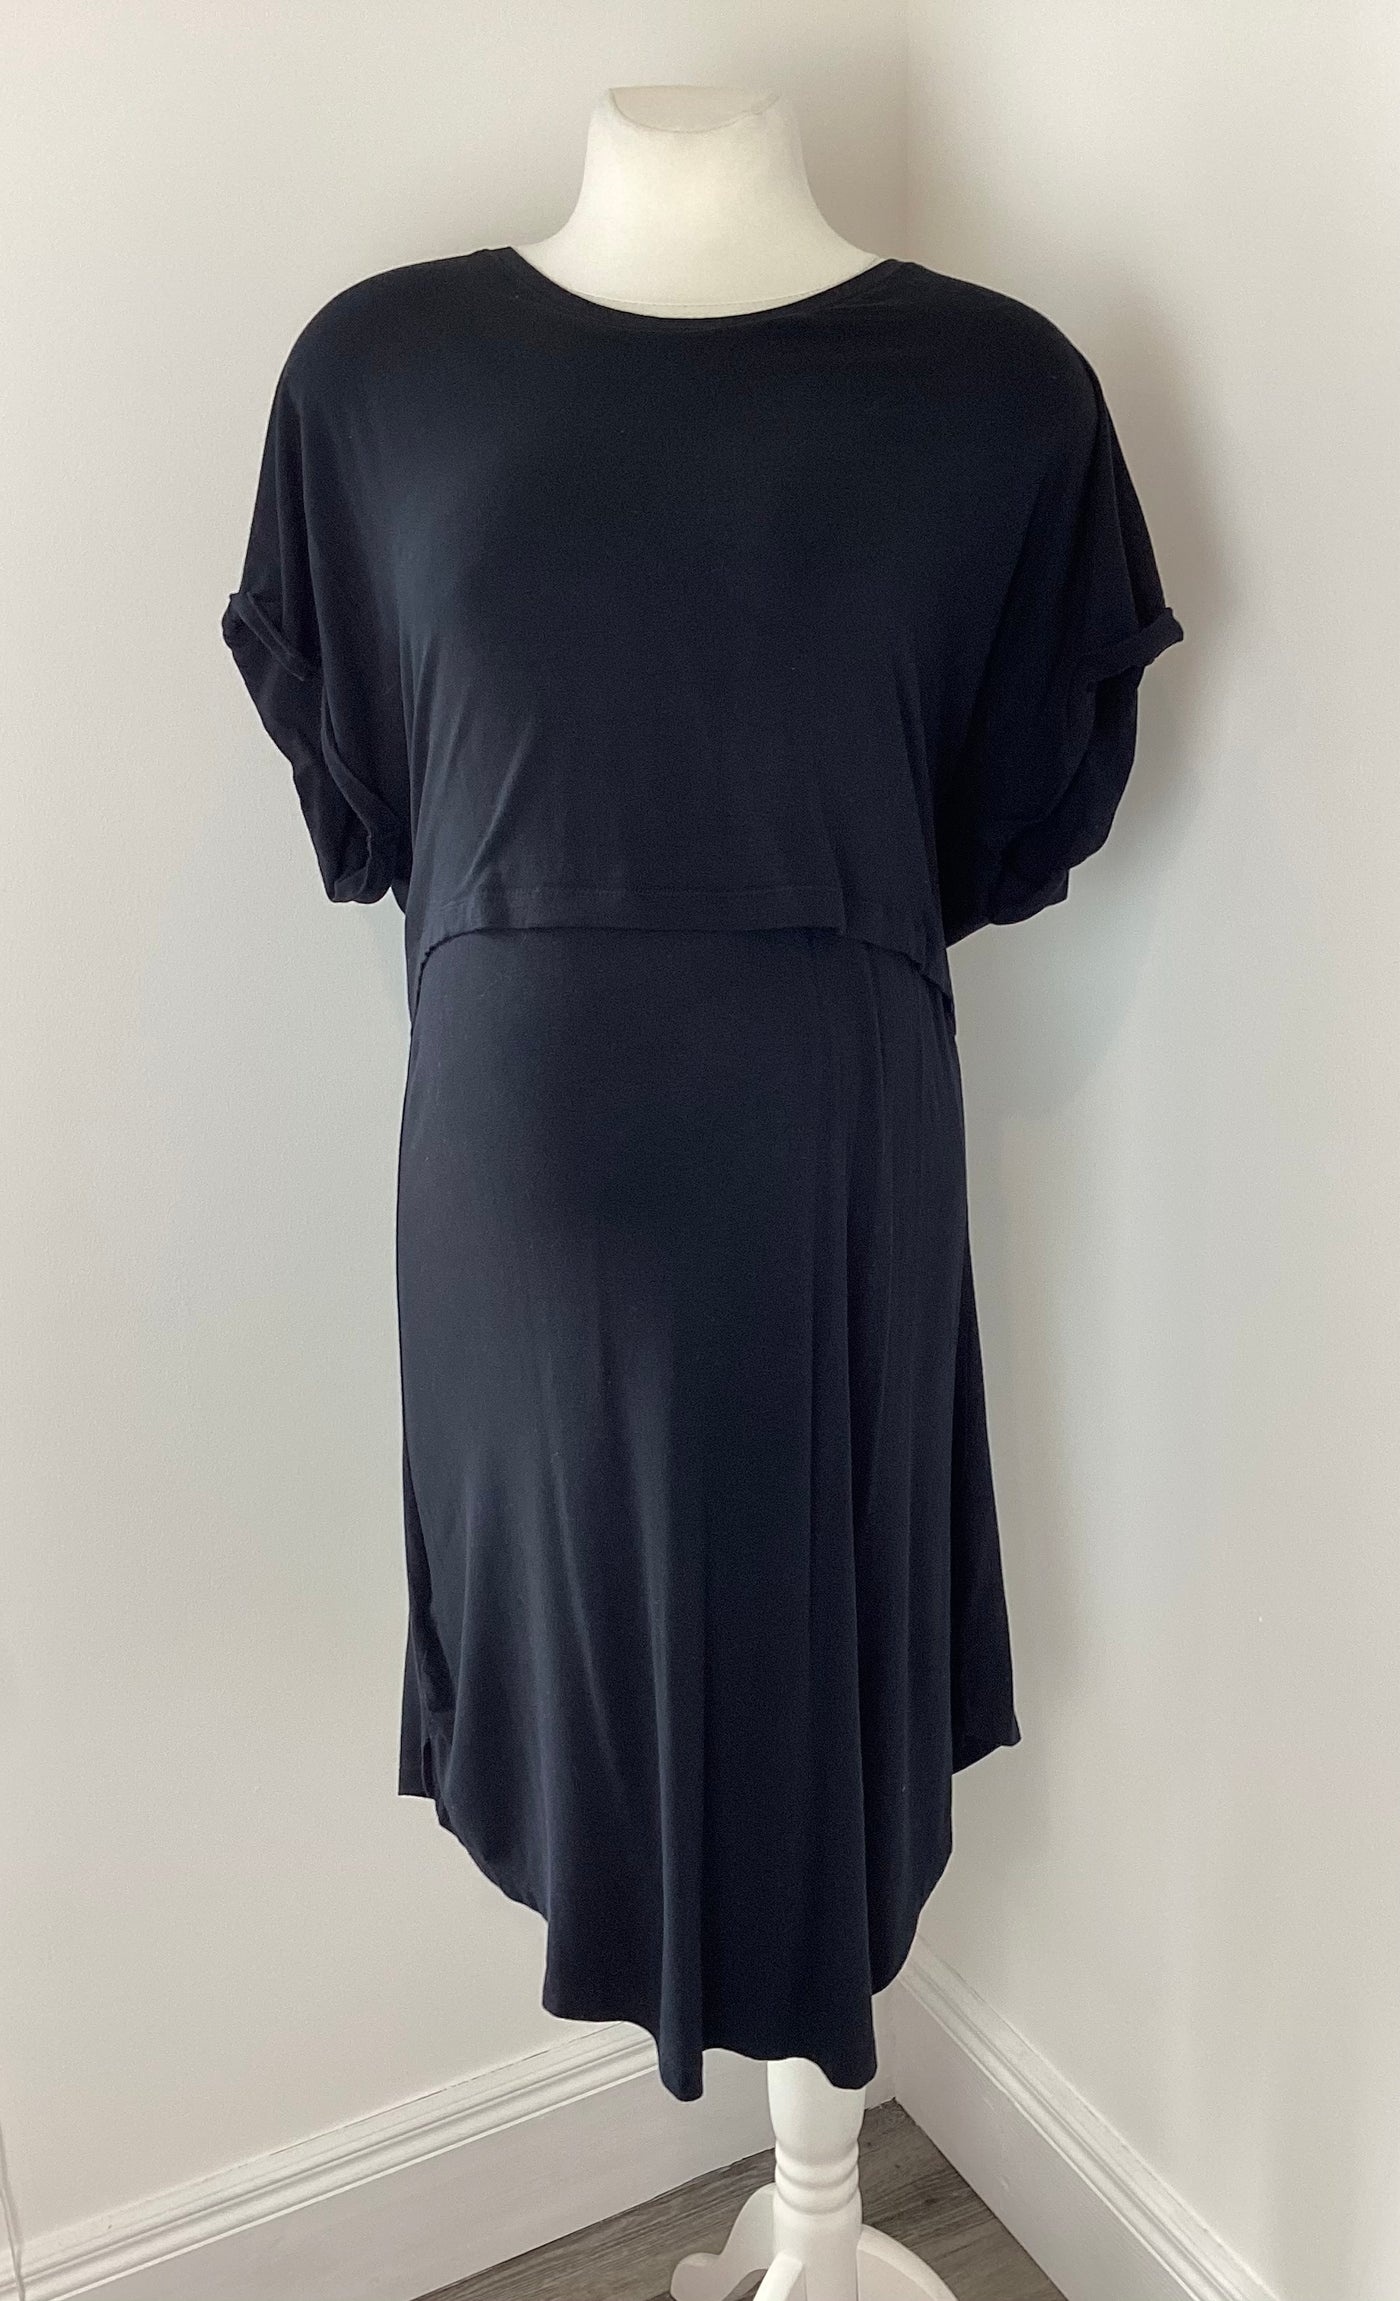 Blooming Marvellous black short sleeved nursing dress - Size L (Approx UK 14/16)